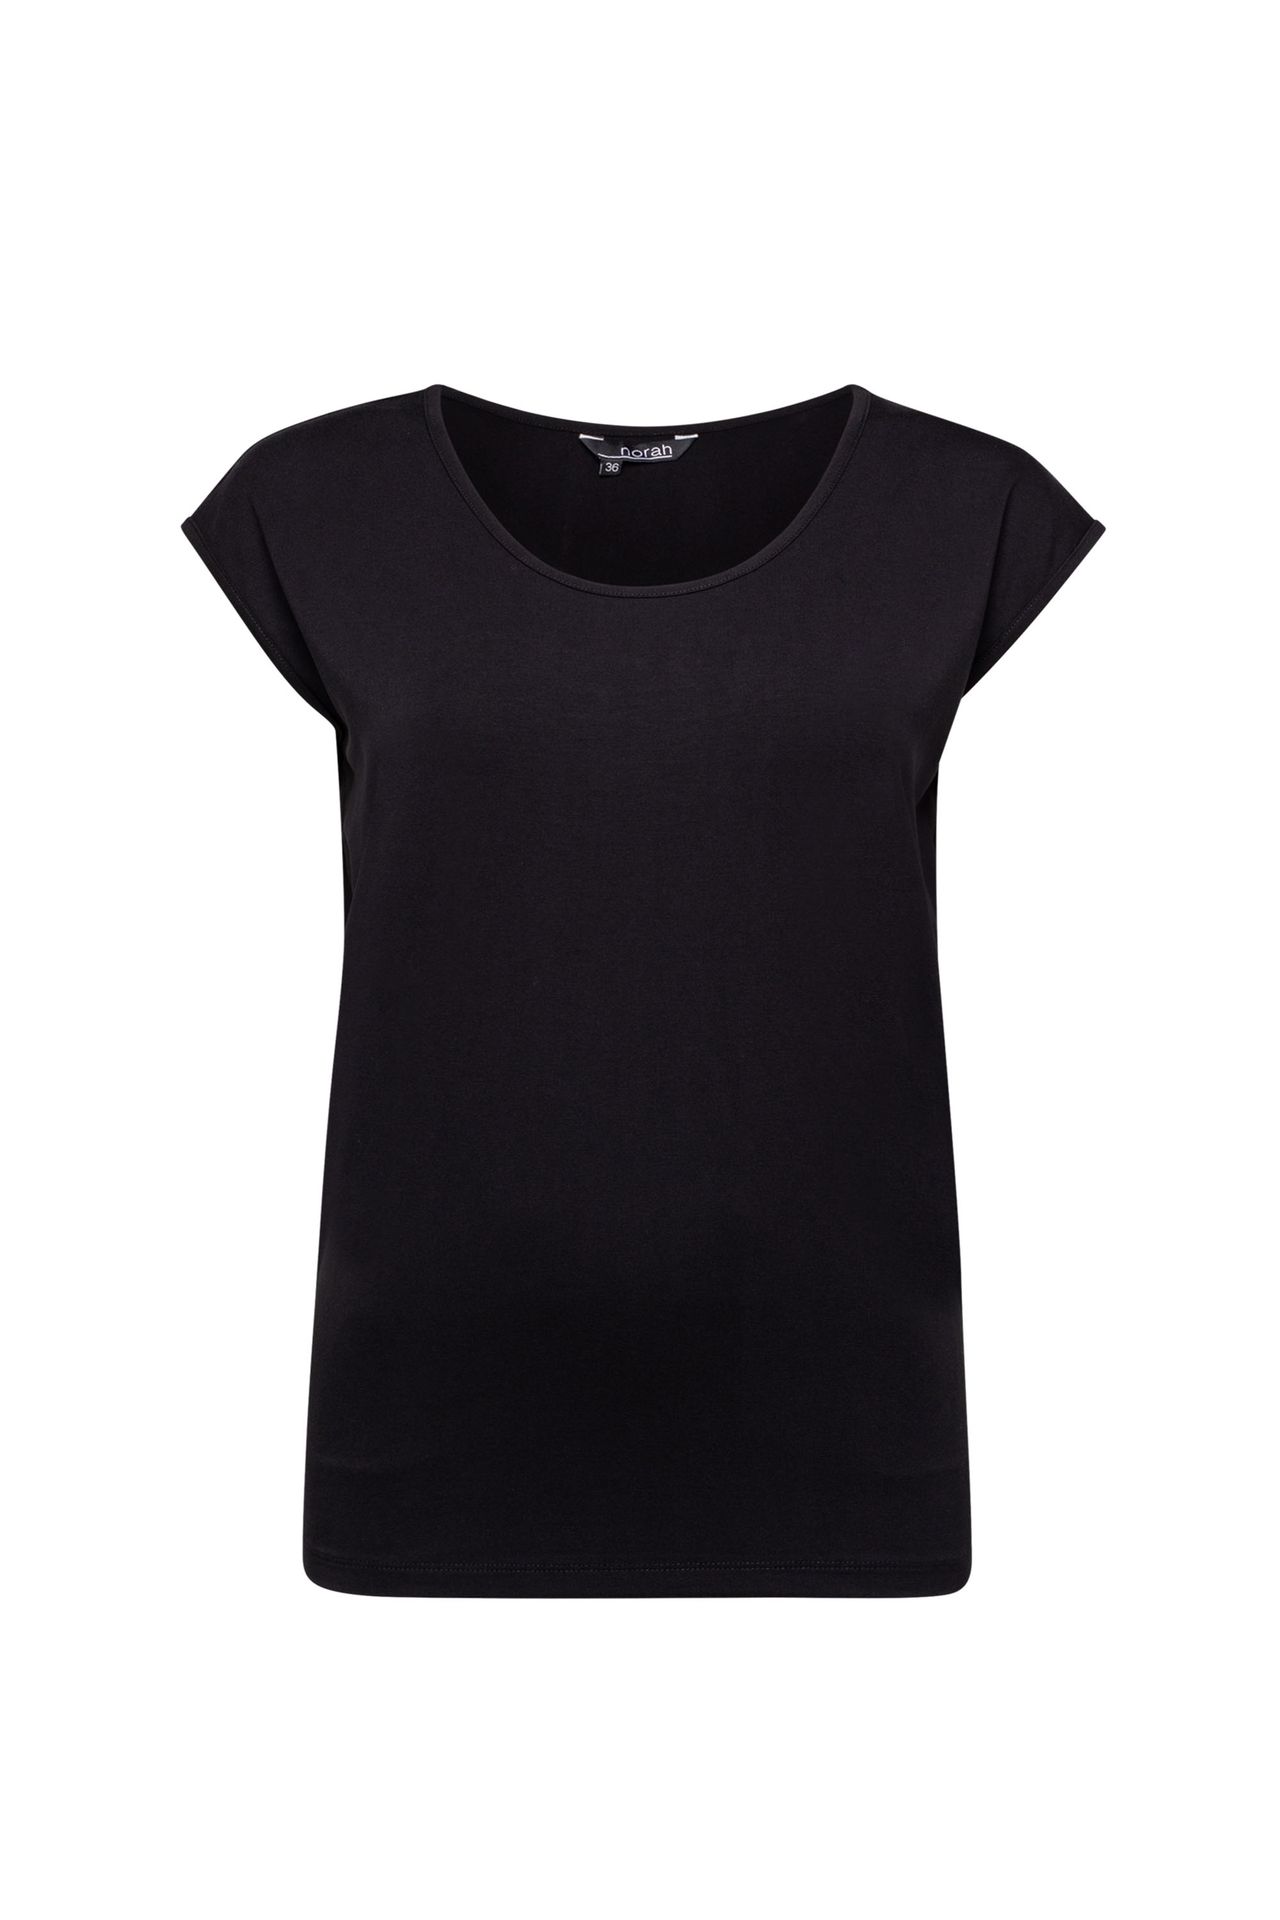 Norah Zwart shirt black 211918-001